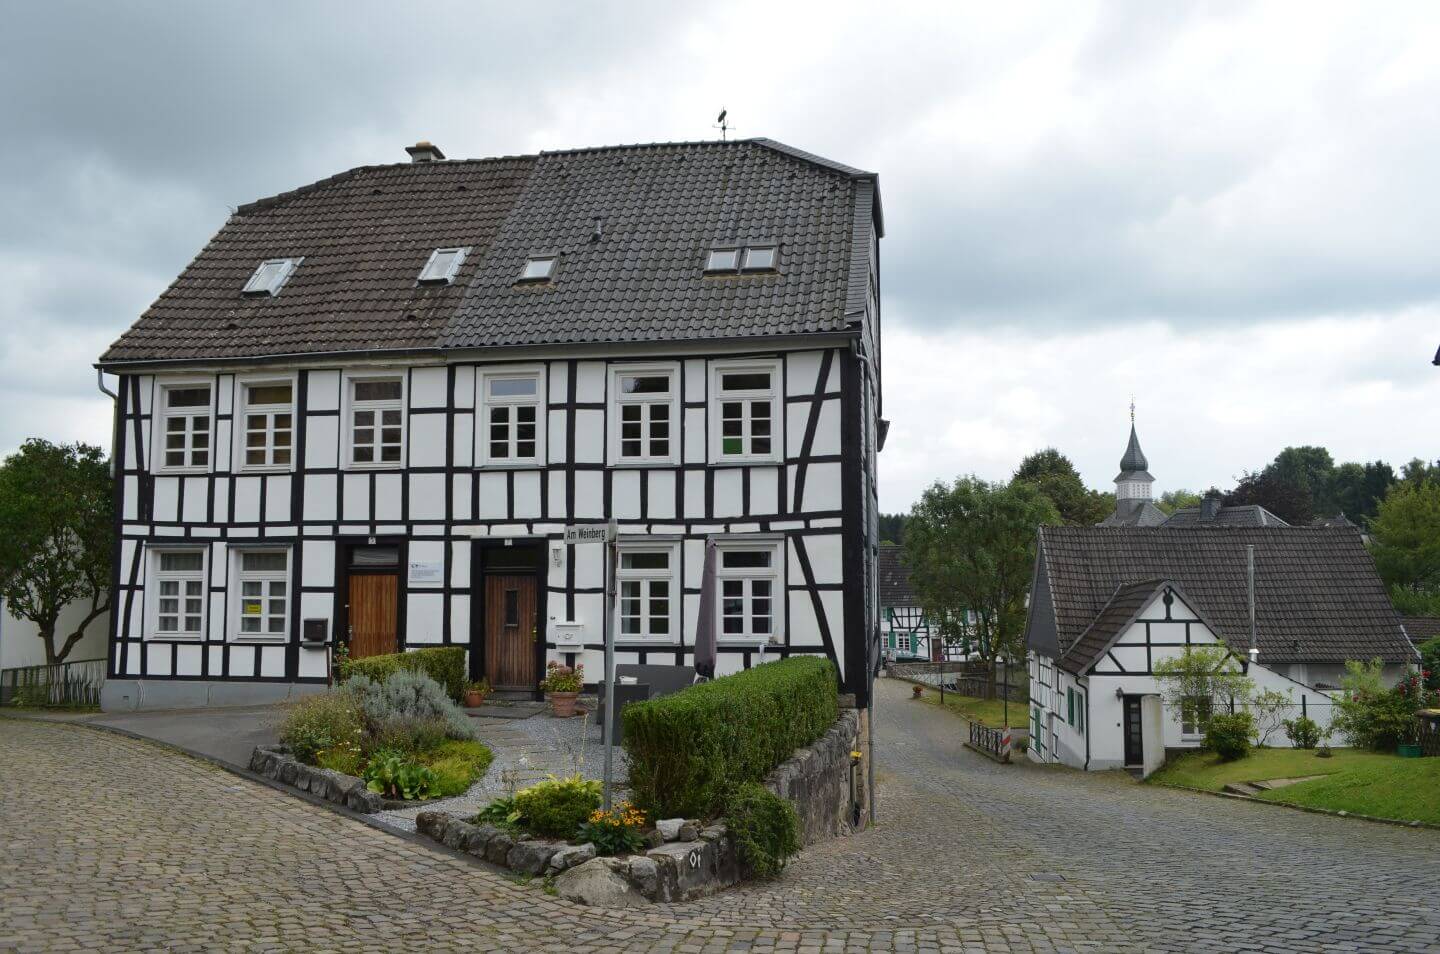 Historischer Stadtteil Gruiten-Dorf in Haan